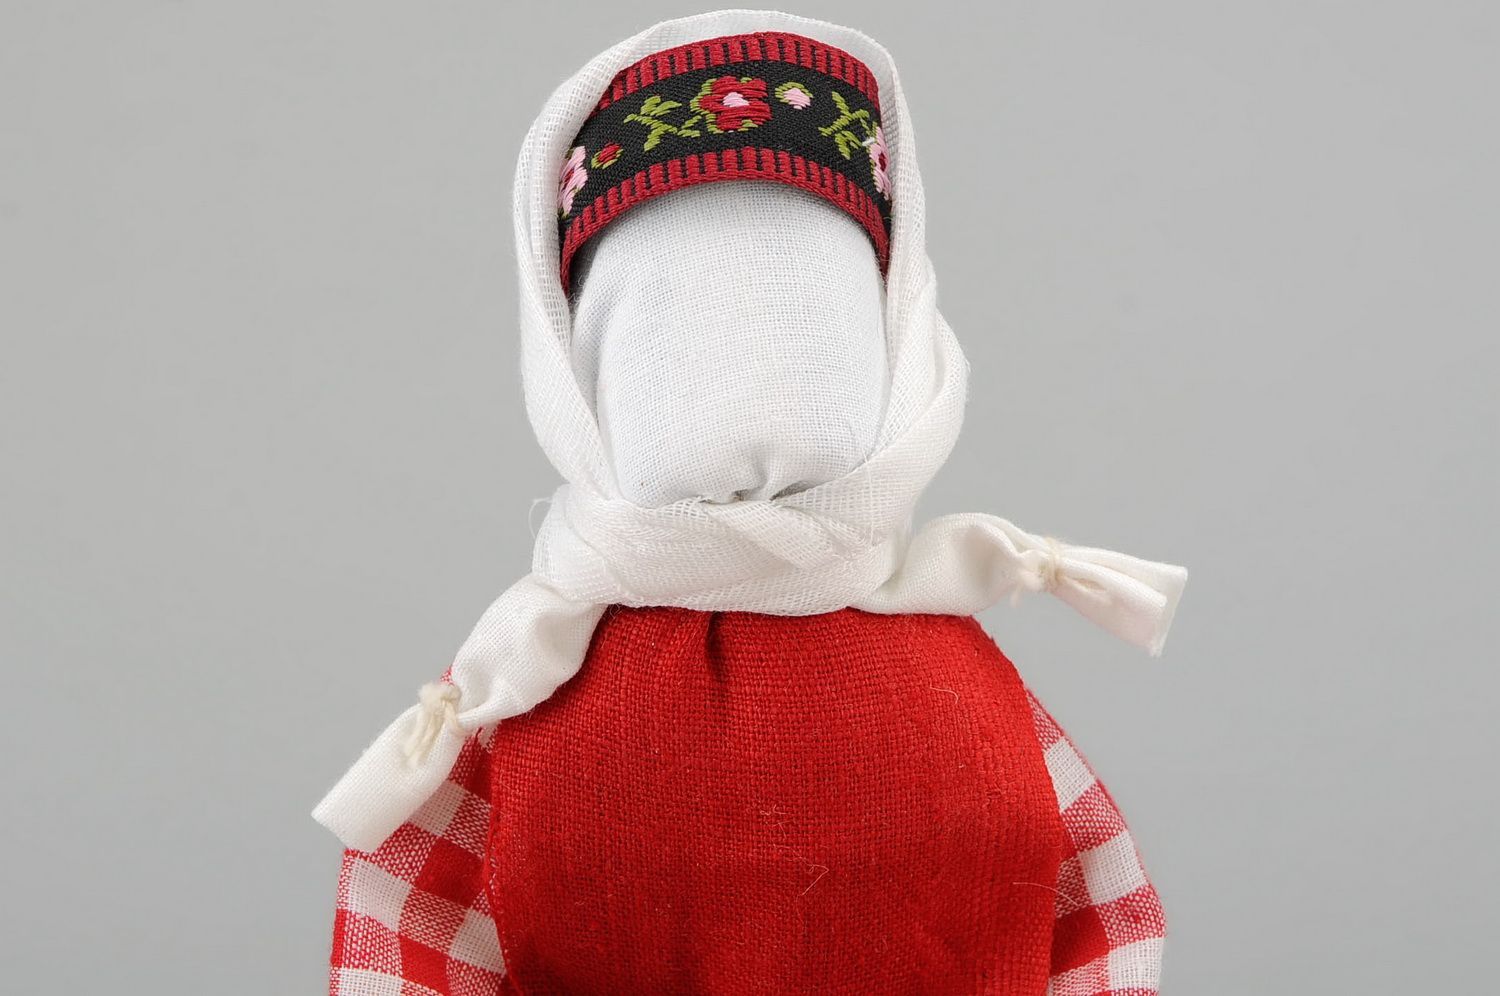 Motanka doll made of cotton photo 5